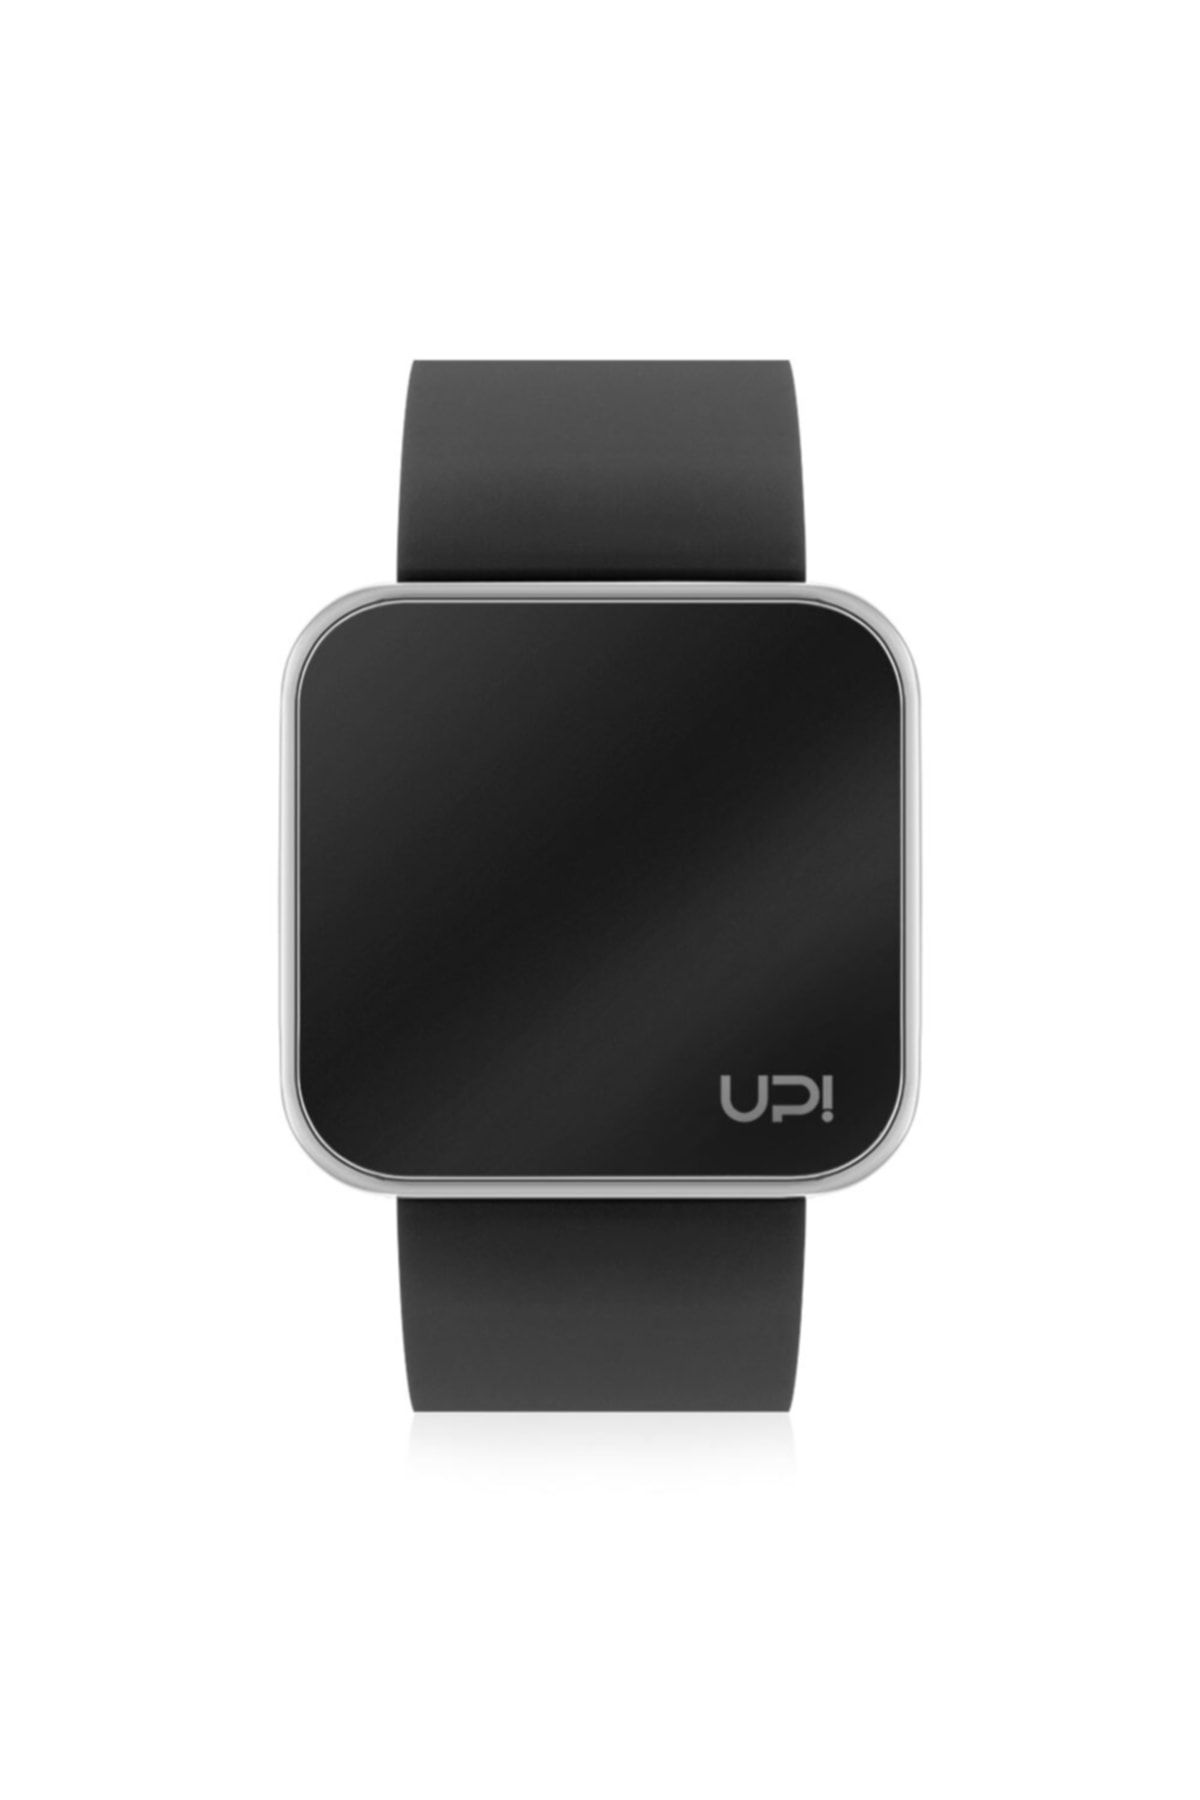 Upwatch Upwatch Touch Shıny Sılver Unisex Kol Saati